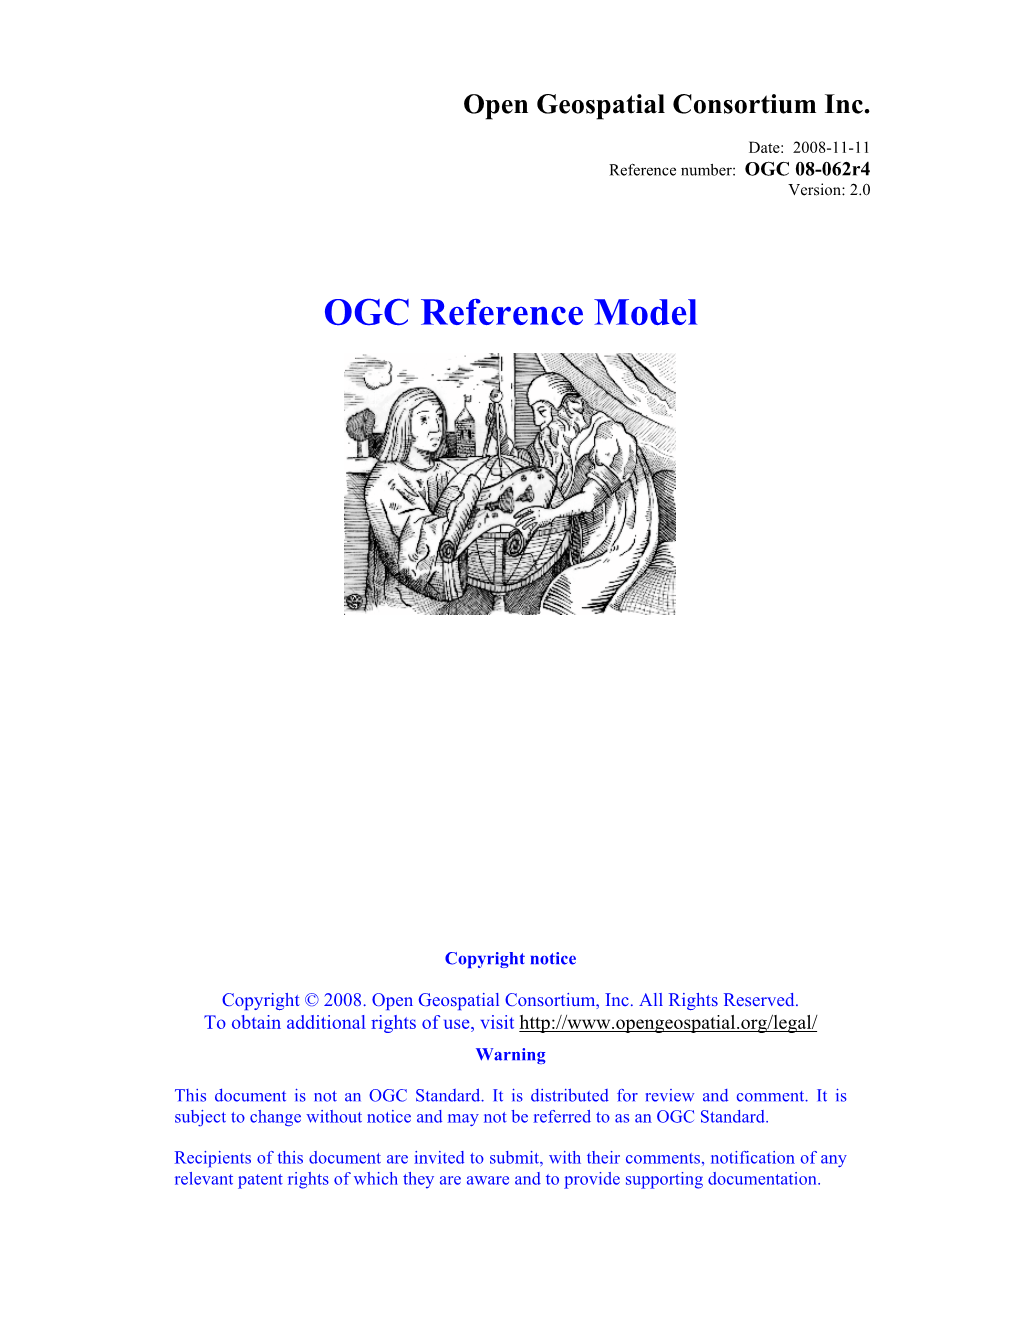 OGC Reference Model